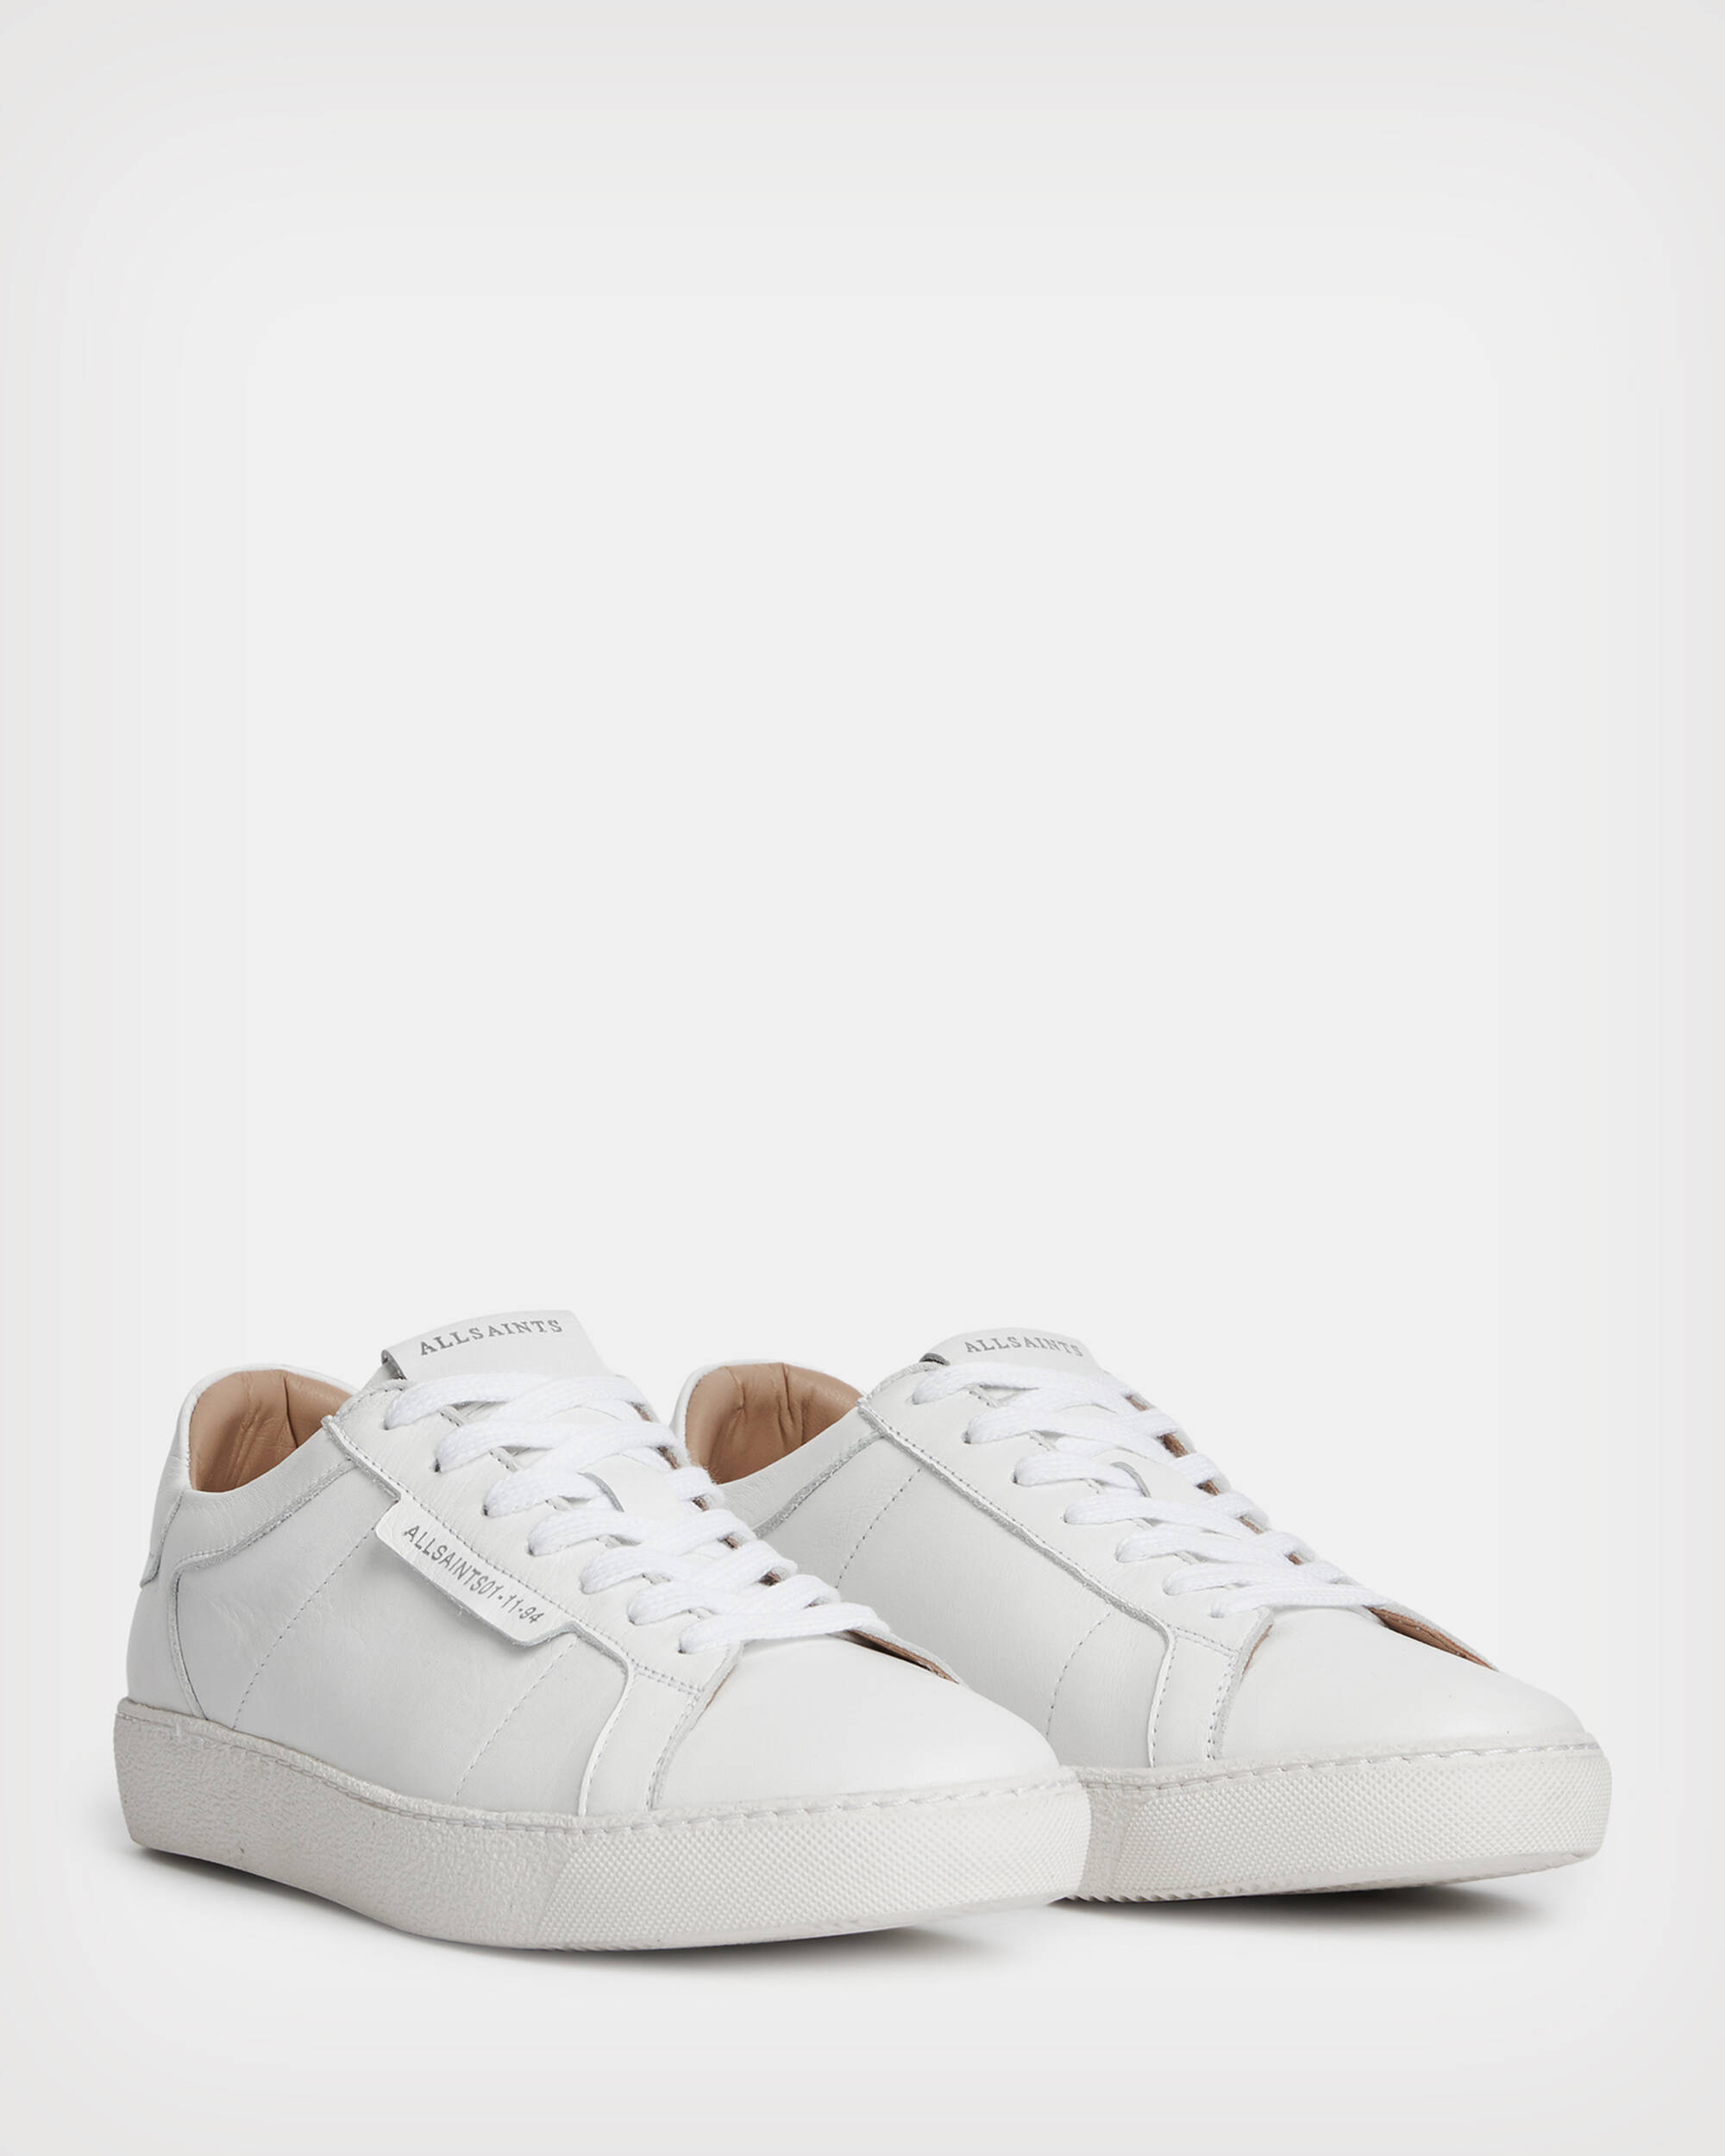 Kvæle Ruddy Mellem Sheer Low Top Leather Sneakers White | ALLSAINTS US